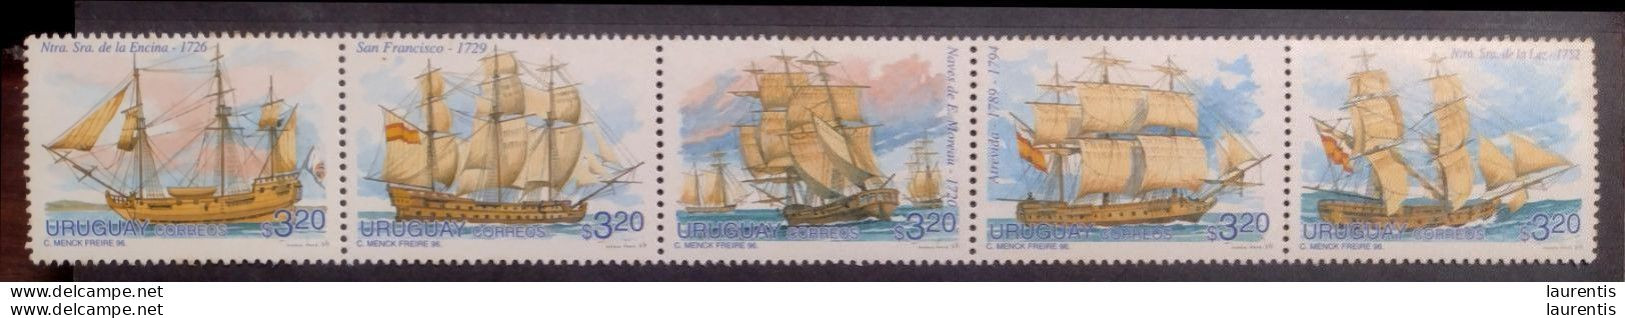 D2785  Ships - Voiliers - Uruguay 1996 MNH - 5,50 .jpg - Barche